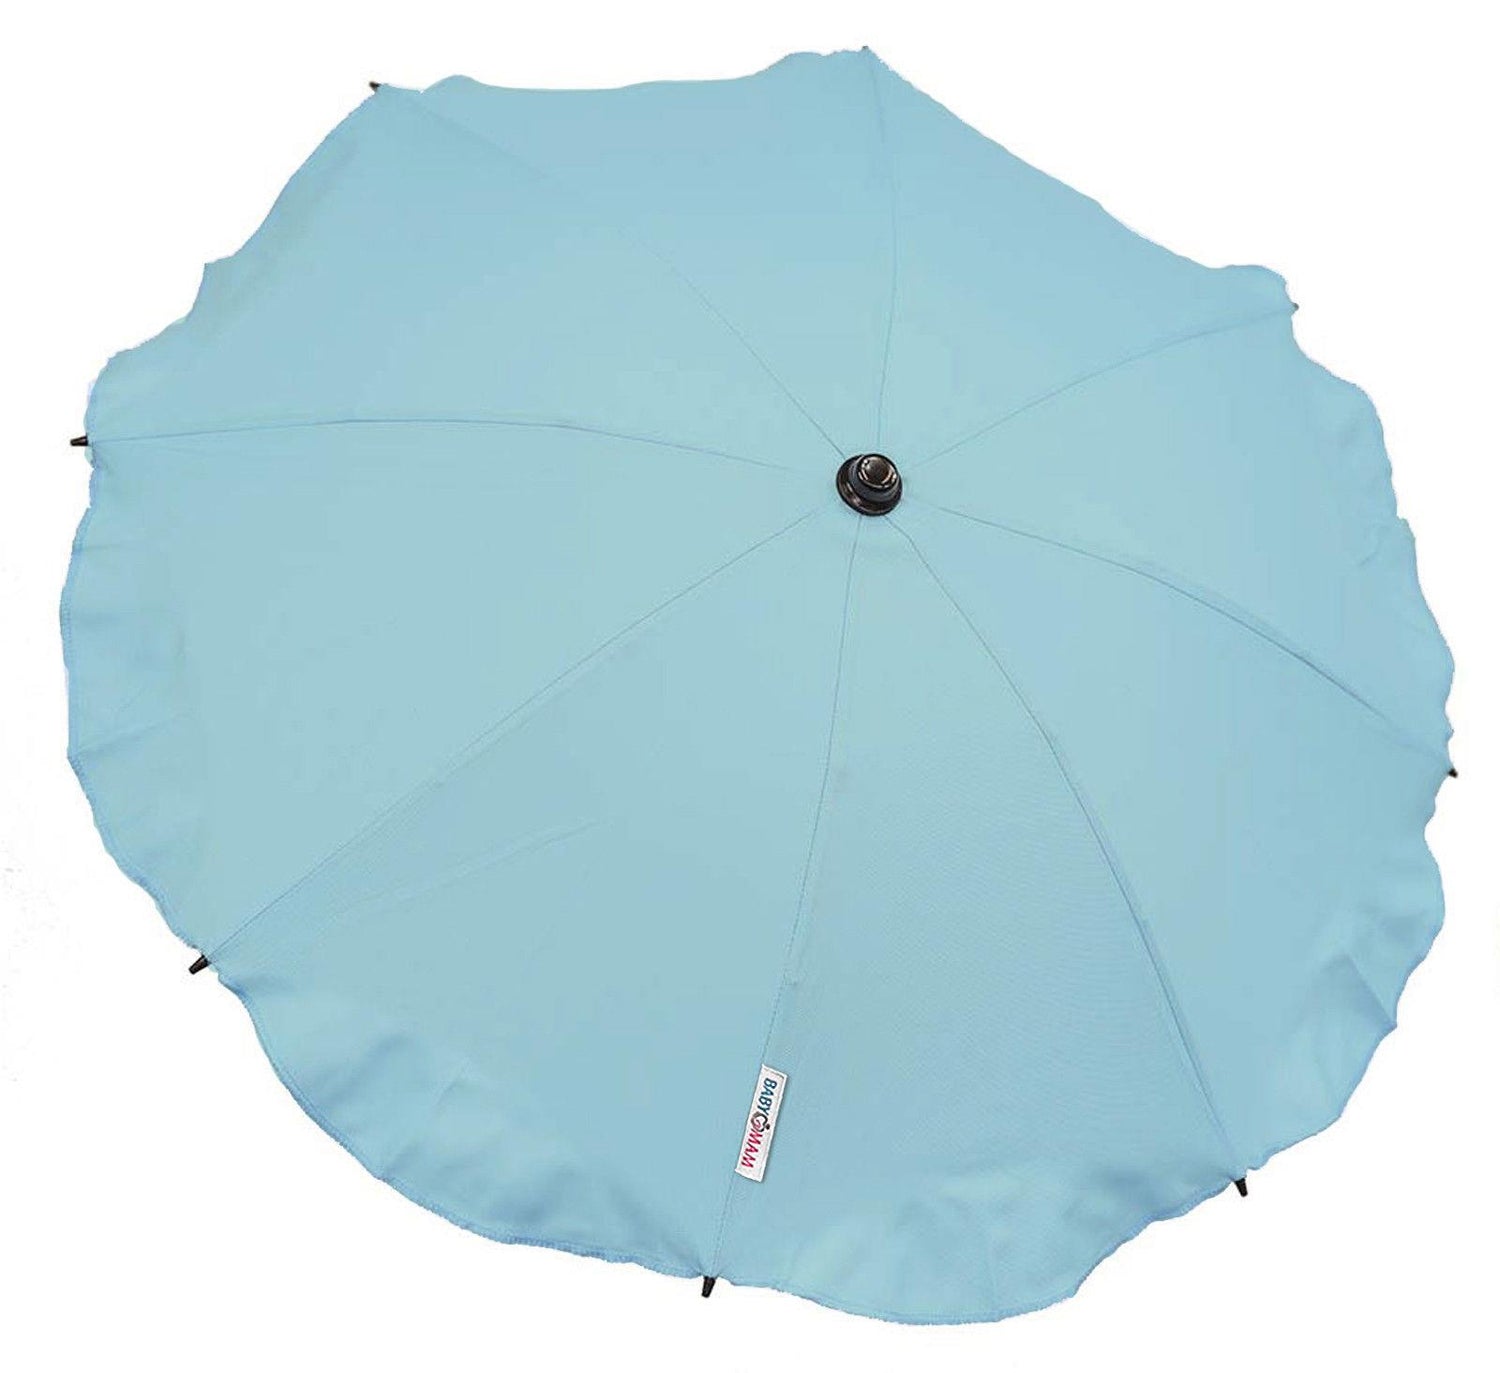 Baby Parasol Universal Sun Umbrella Pram Stroller Canopy Protect From Sun Rain Light Blue